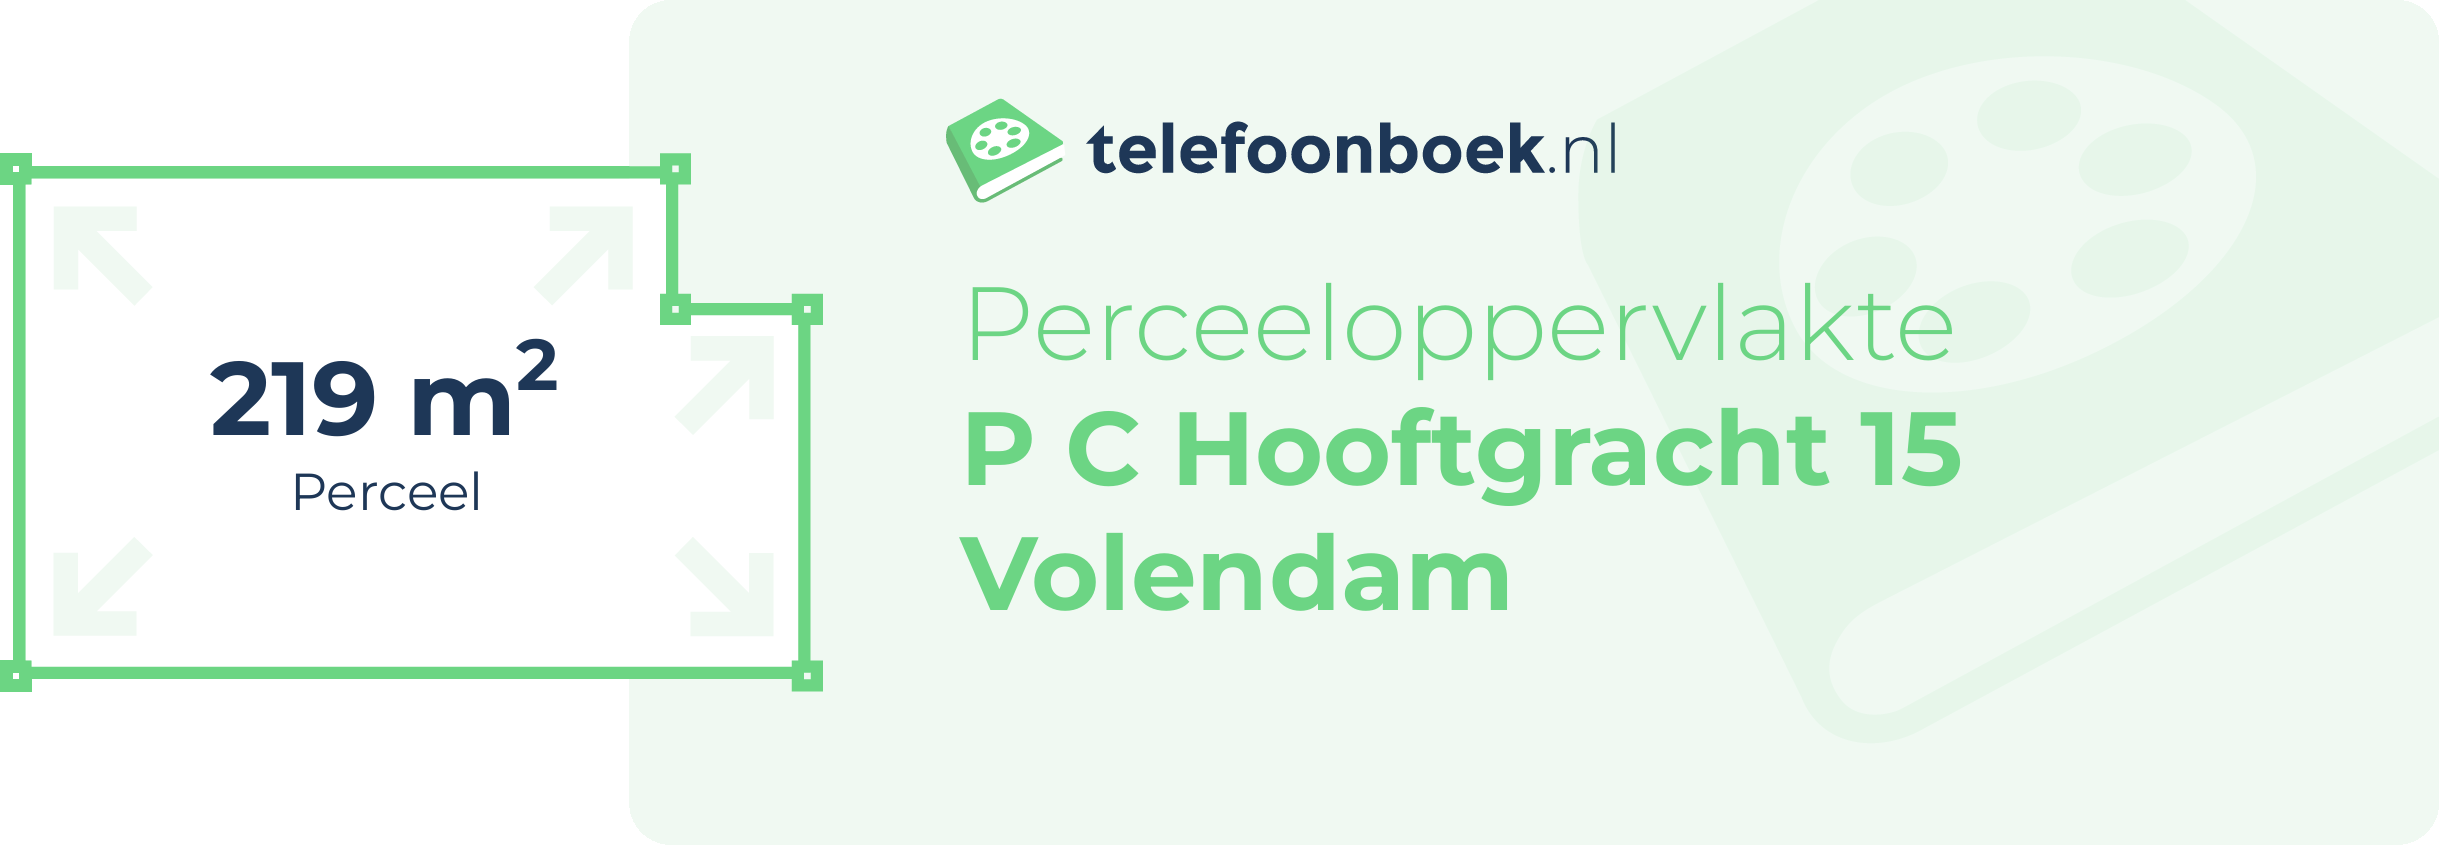 Perceeloppervlakte P C Hooftgracht 15 Volendam